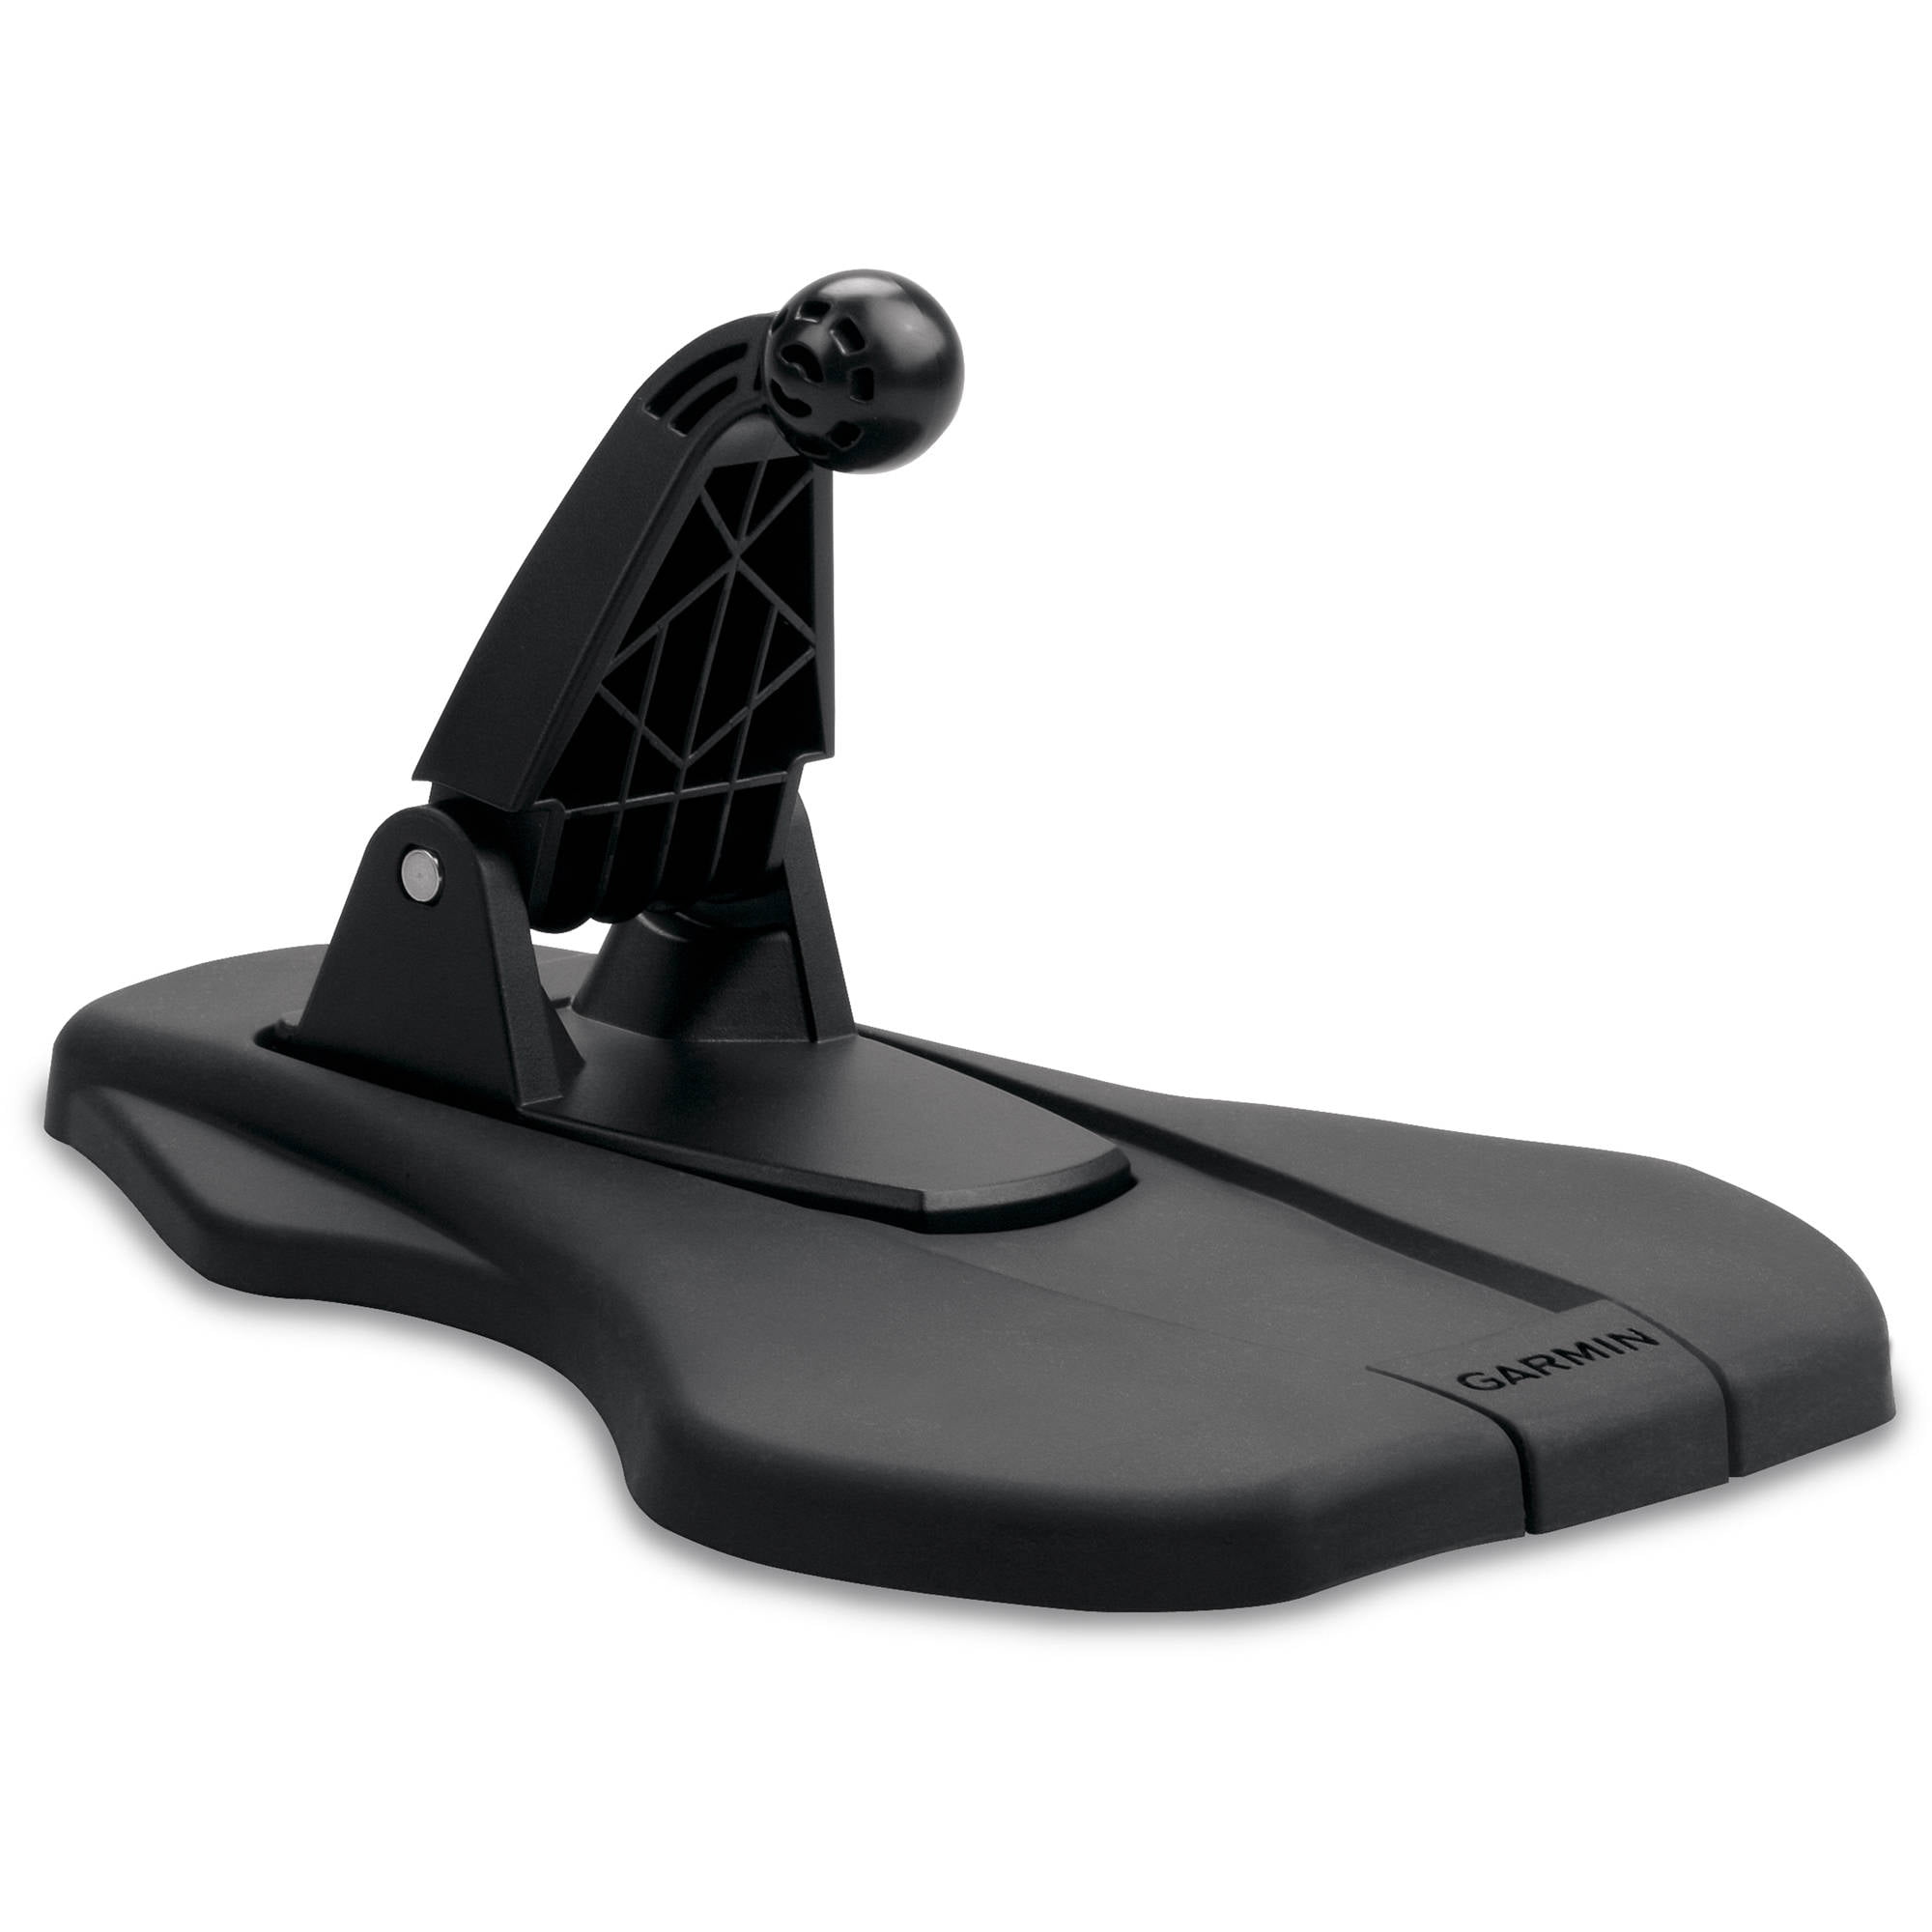 ChargerCity Hippo Dash Dashboard Beanbag Mount Holder for Garmin Nuvi Drive GPS 